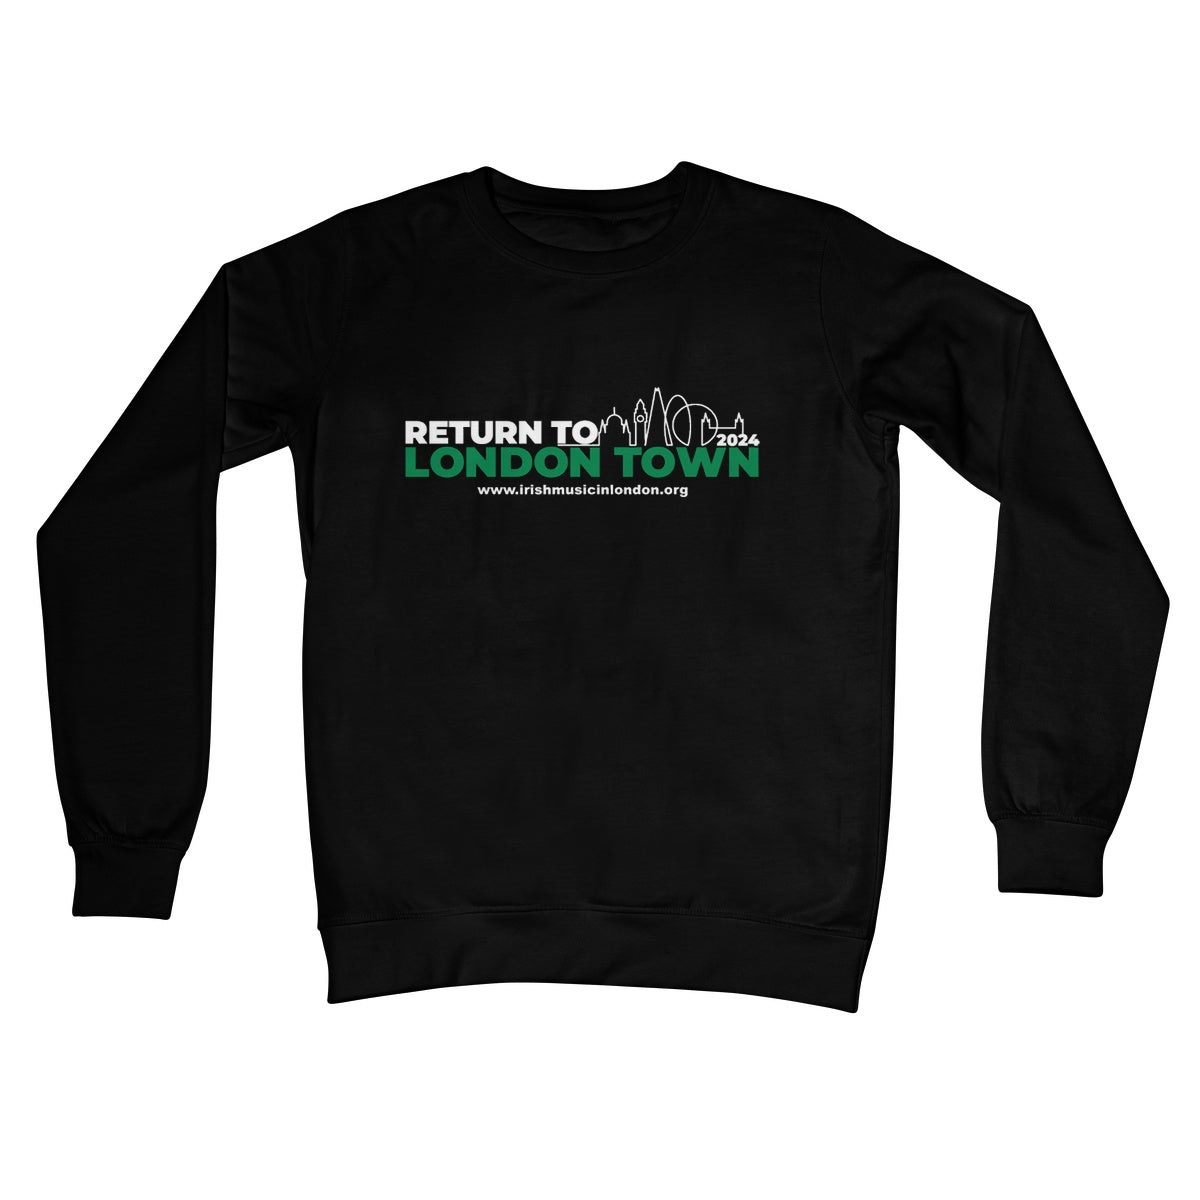 Return to London Town 2024 Sweatshirt